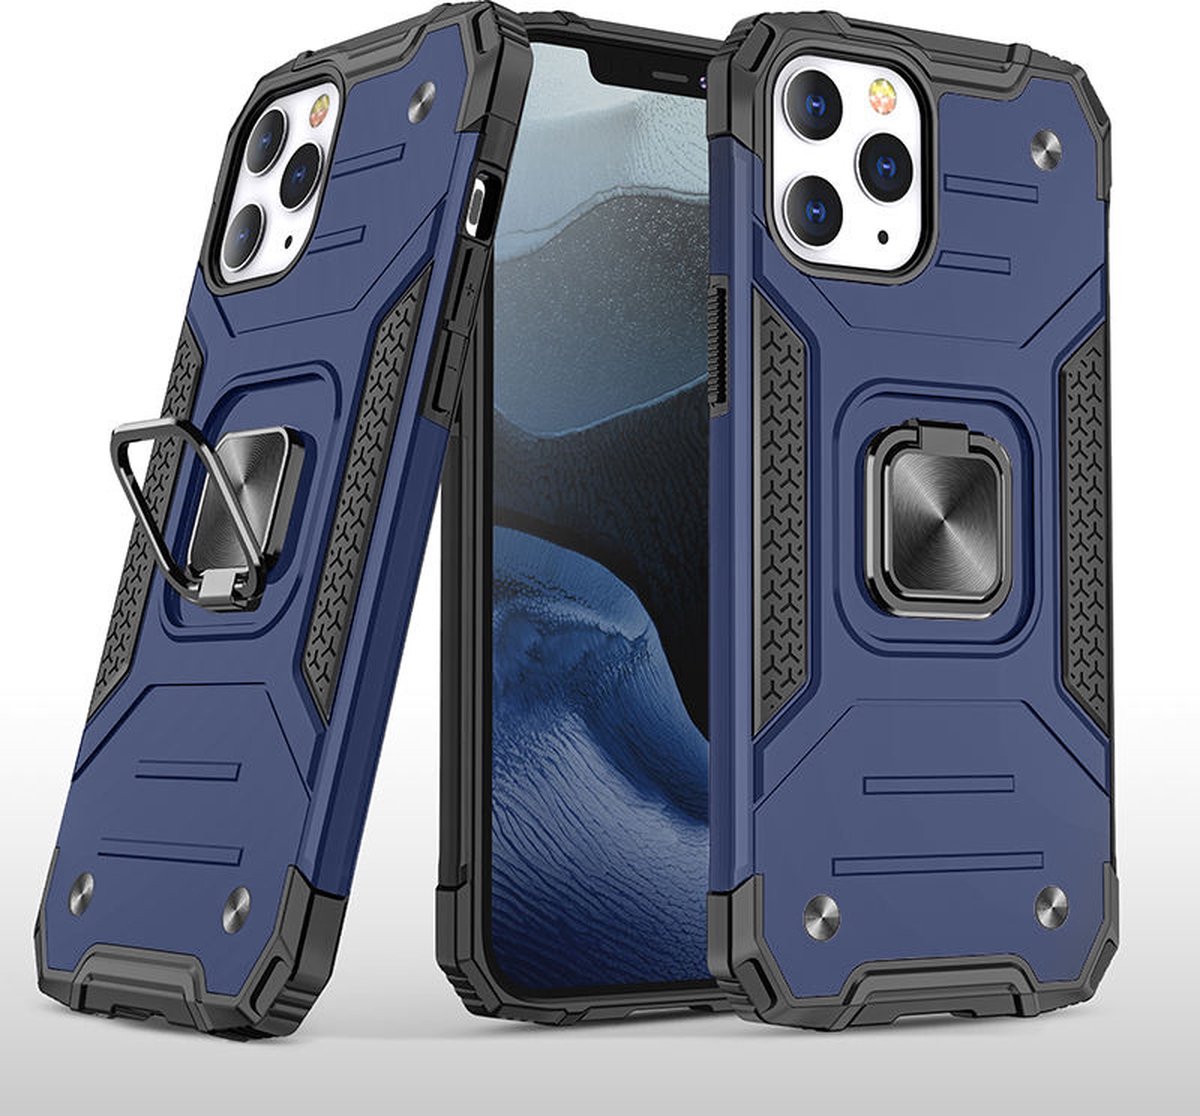 MCM iPhone 12 Pro Max (6,7 inch) Armor hoesje - Blauw